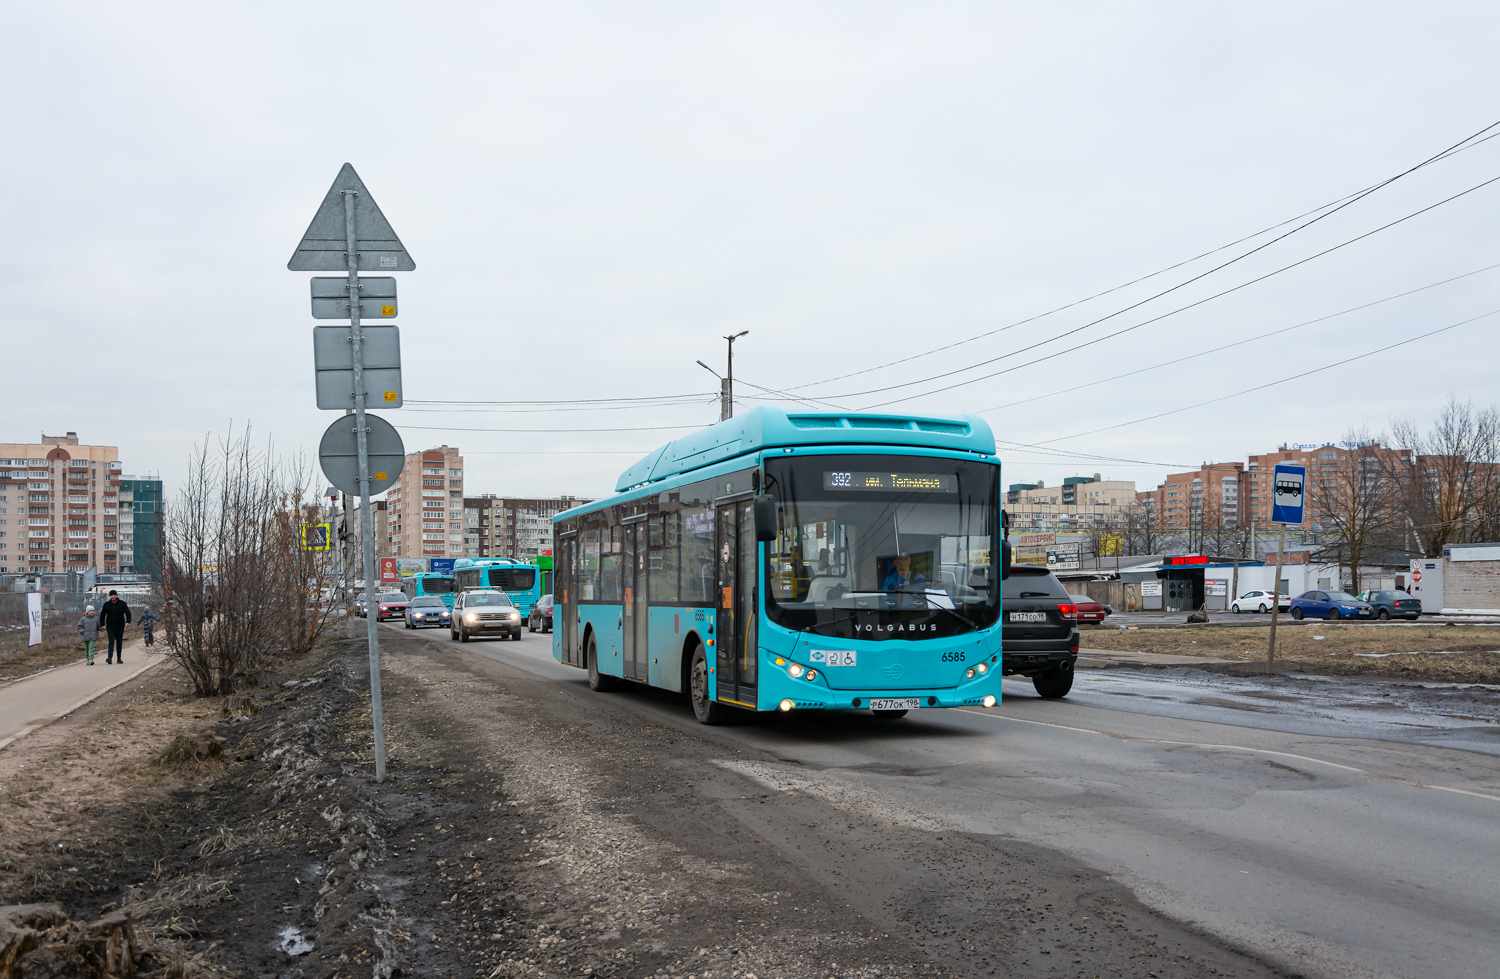 Saint Petersburg, Volgabus-5270.G4 (CNG) # 6585